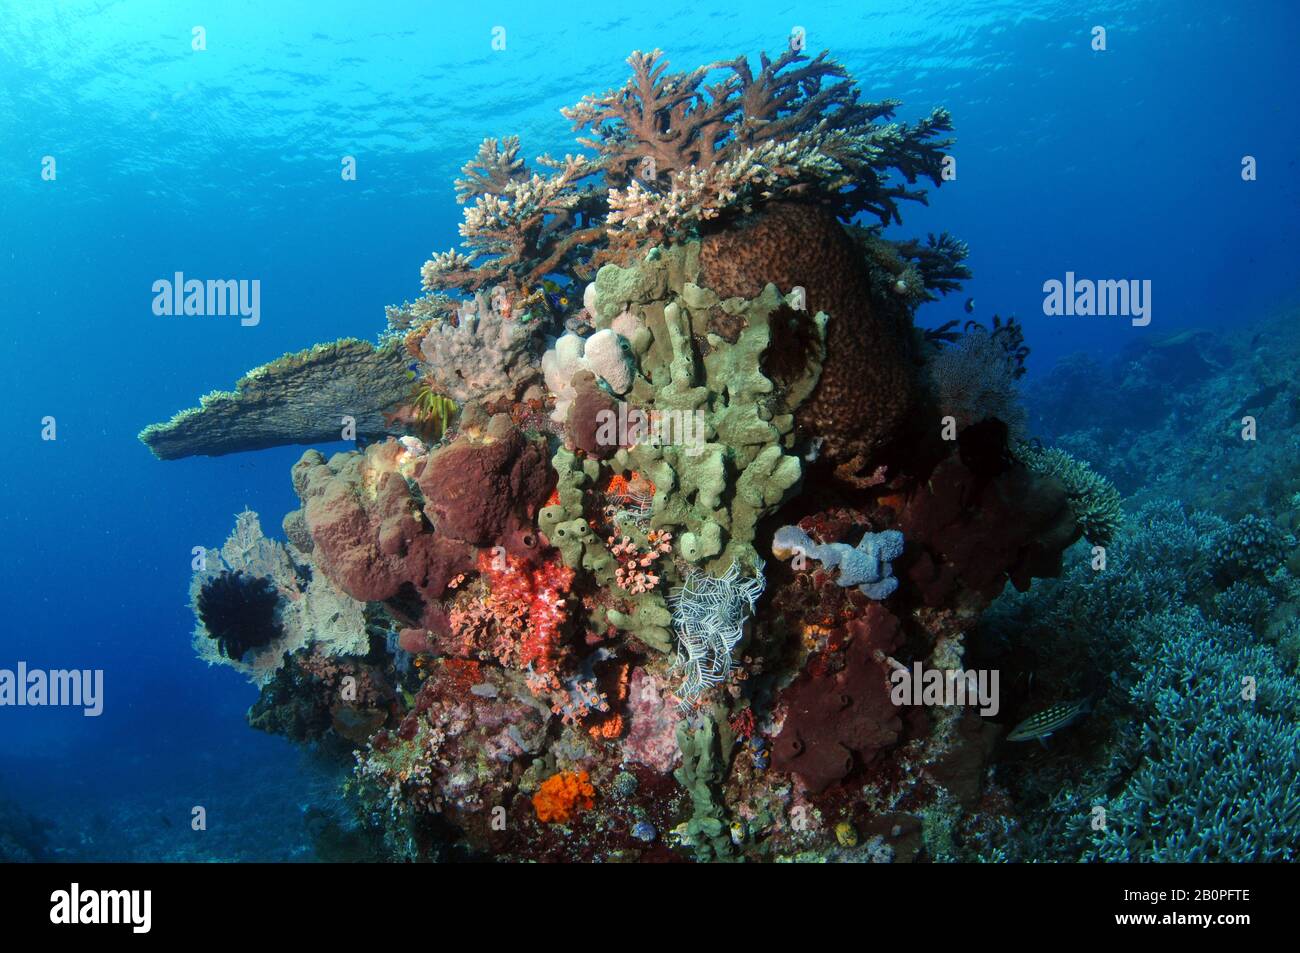 Biodiverse tropical coral reef scene, Komodo National Park, Indonesia Stock Photo